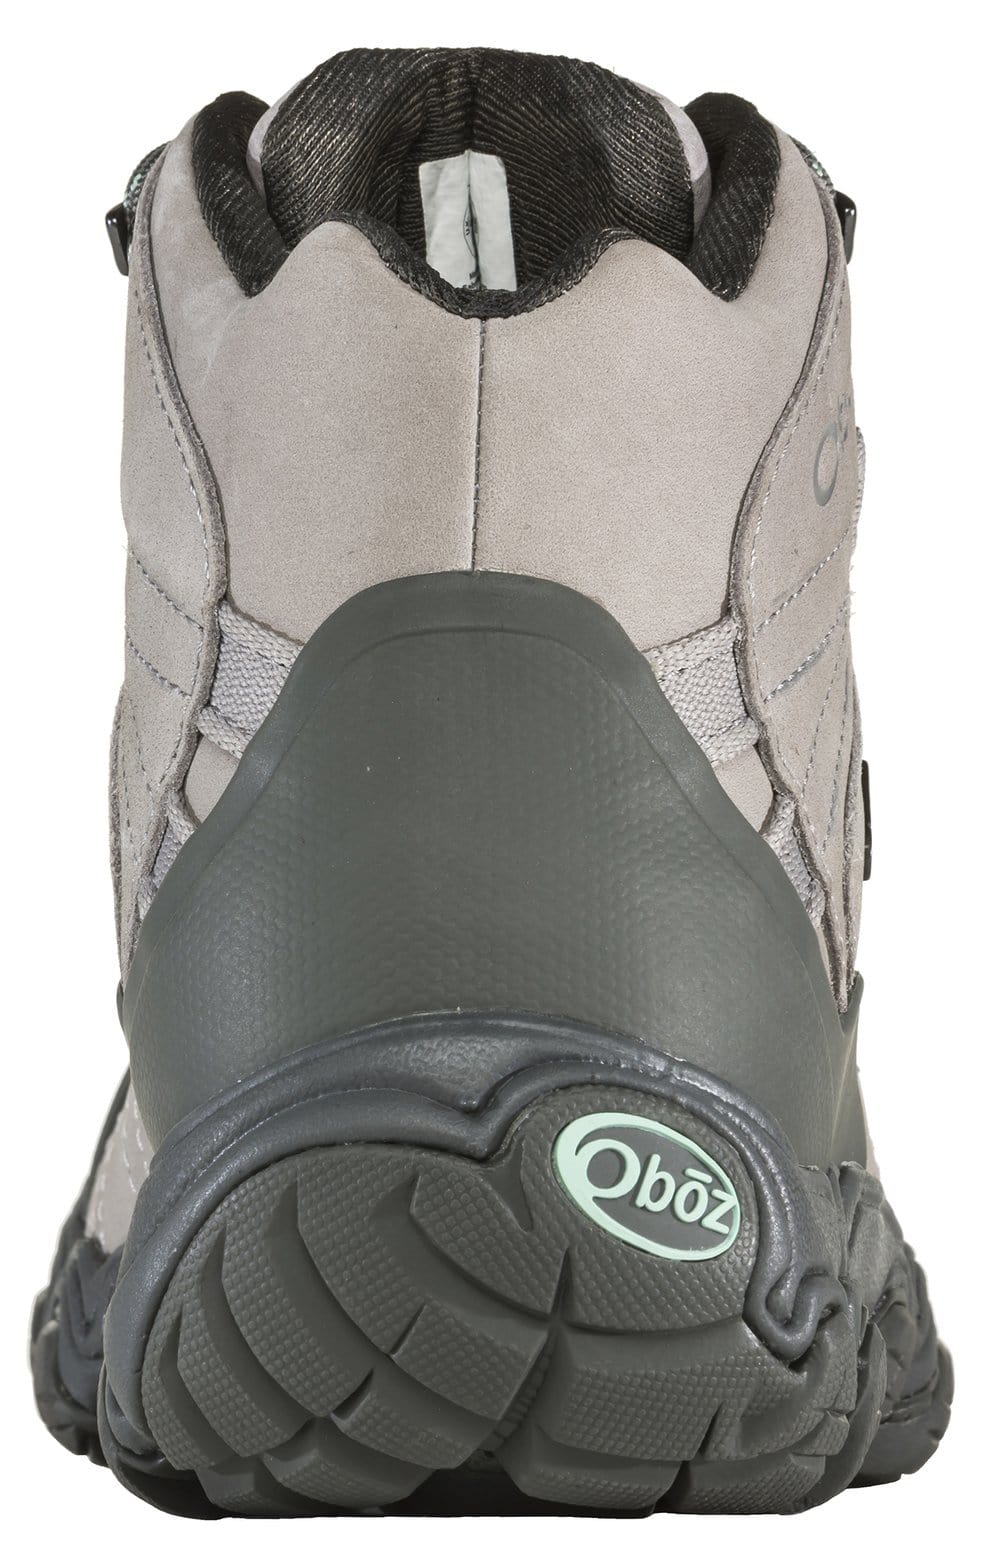 Oboz Women's Bridger Mid Waterproof Hiking Shoe